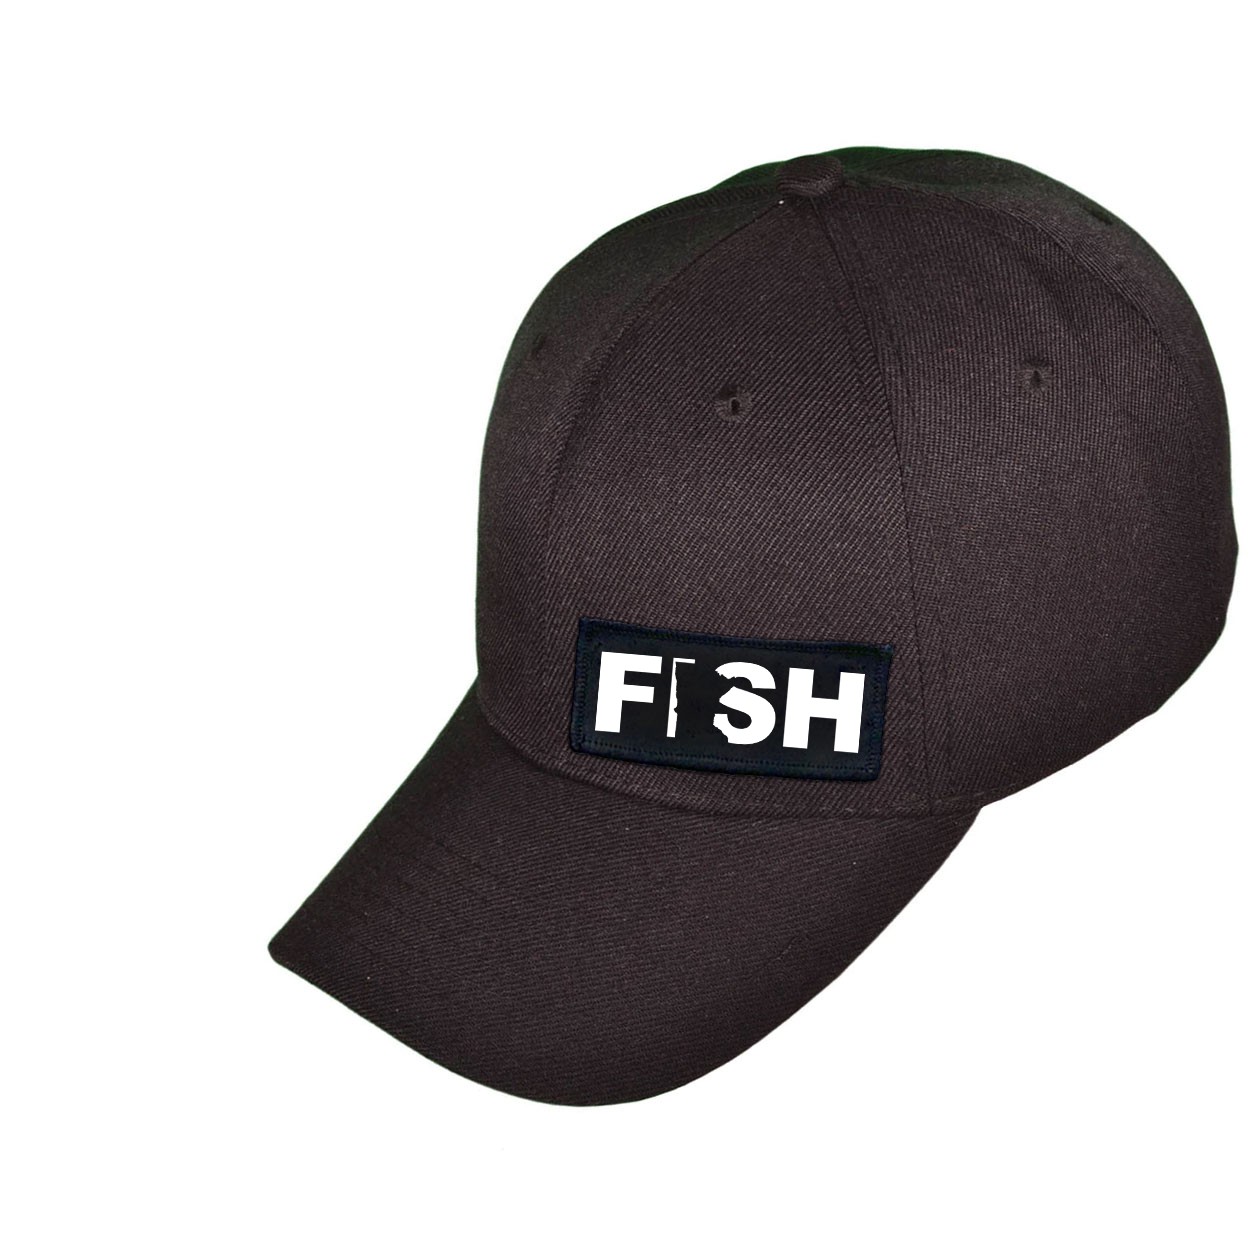 https://lifebrand.co/wp-content/blogs.dir/147/files/2021/12/fish-minnesota-night-out-woven-patch-velcro-trucker-hat-black-white-logo-20220408170840.jpg